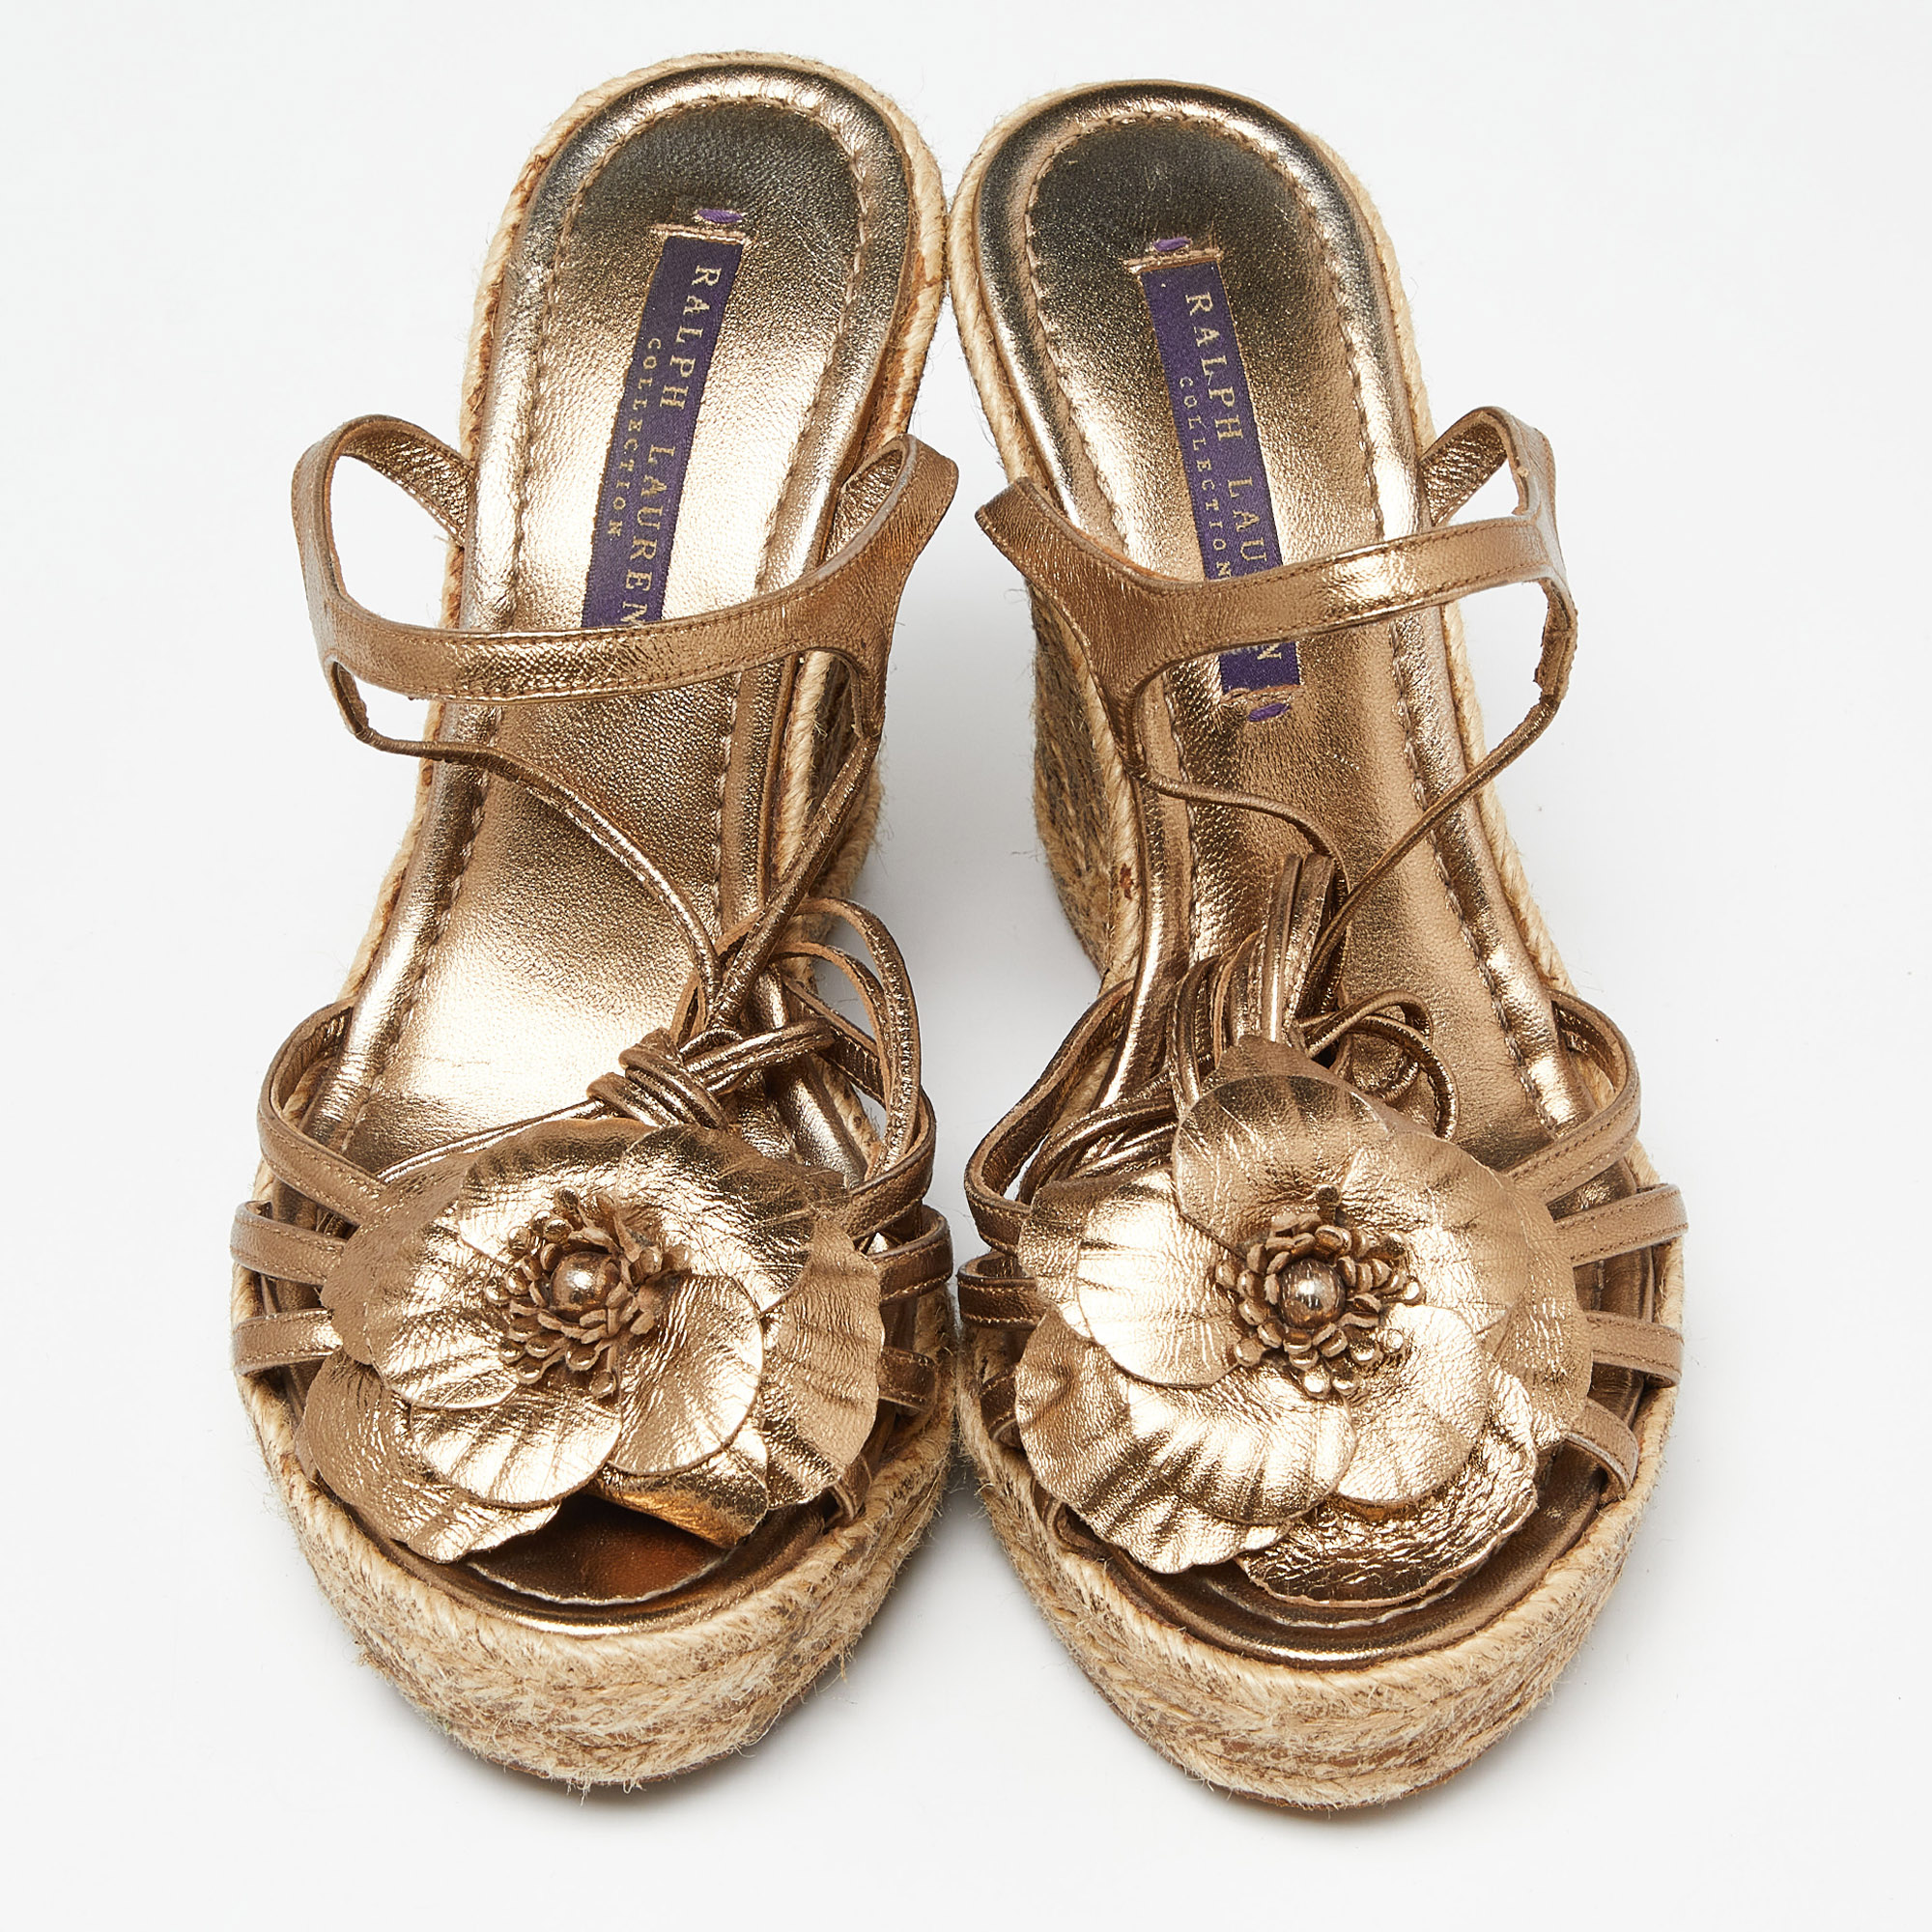 Ralph Lauren Collection Metallic Leather Flower Applique Espadrille Wedge Ankle Tie Sandals Size 37